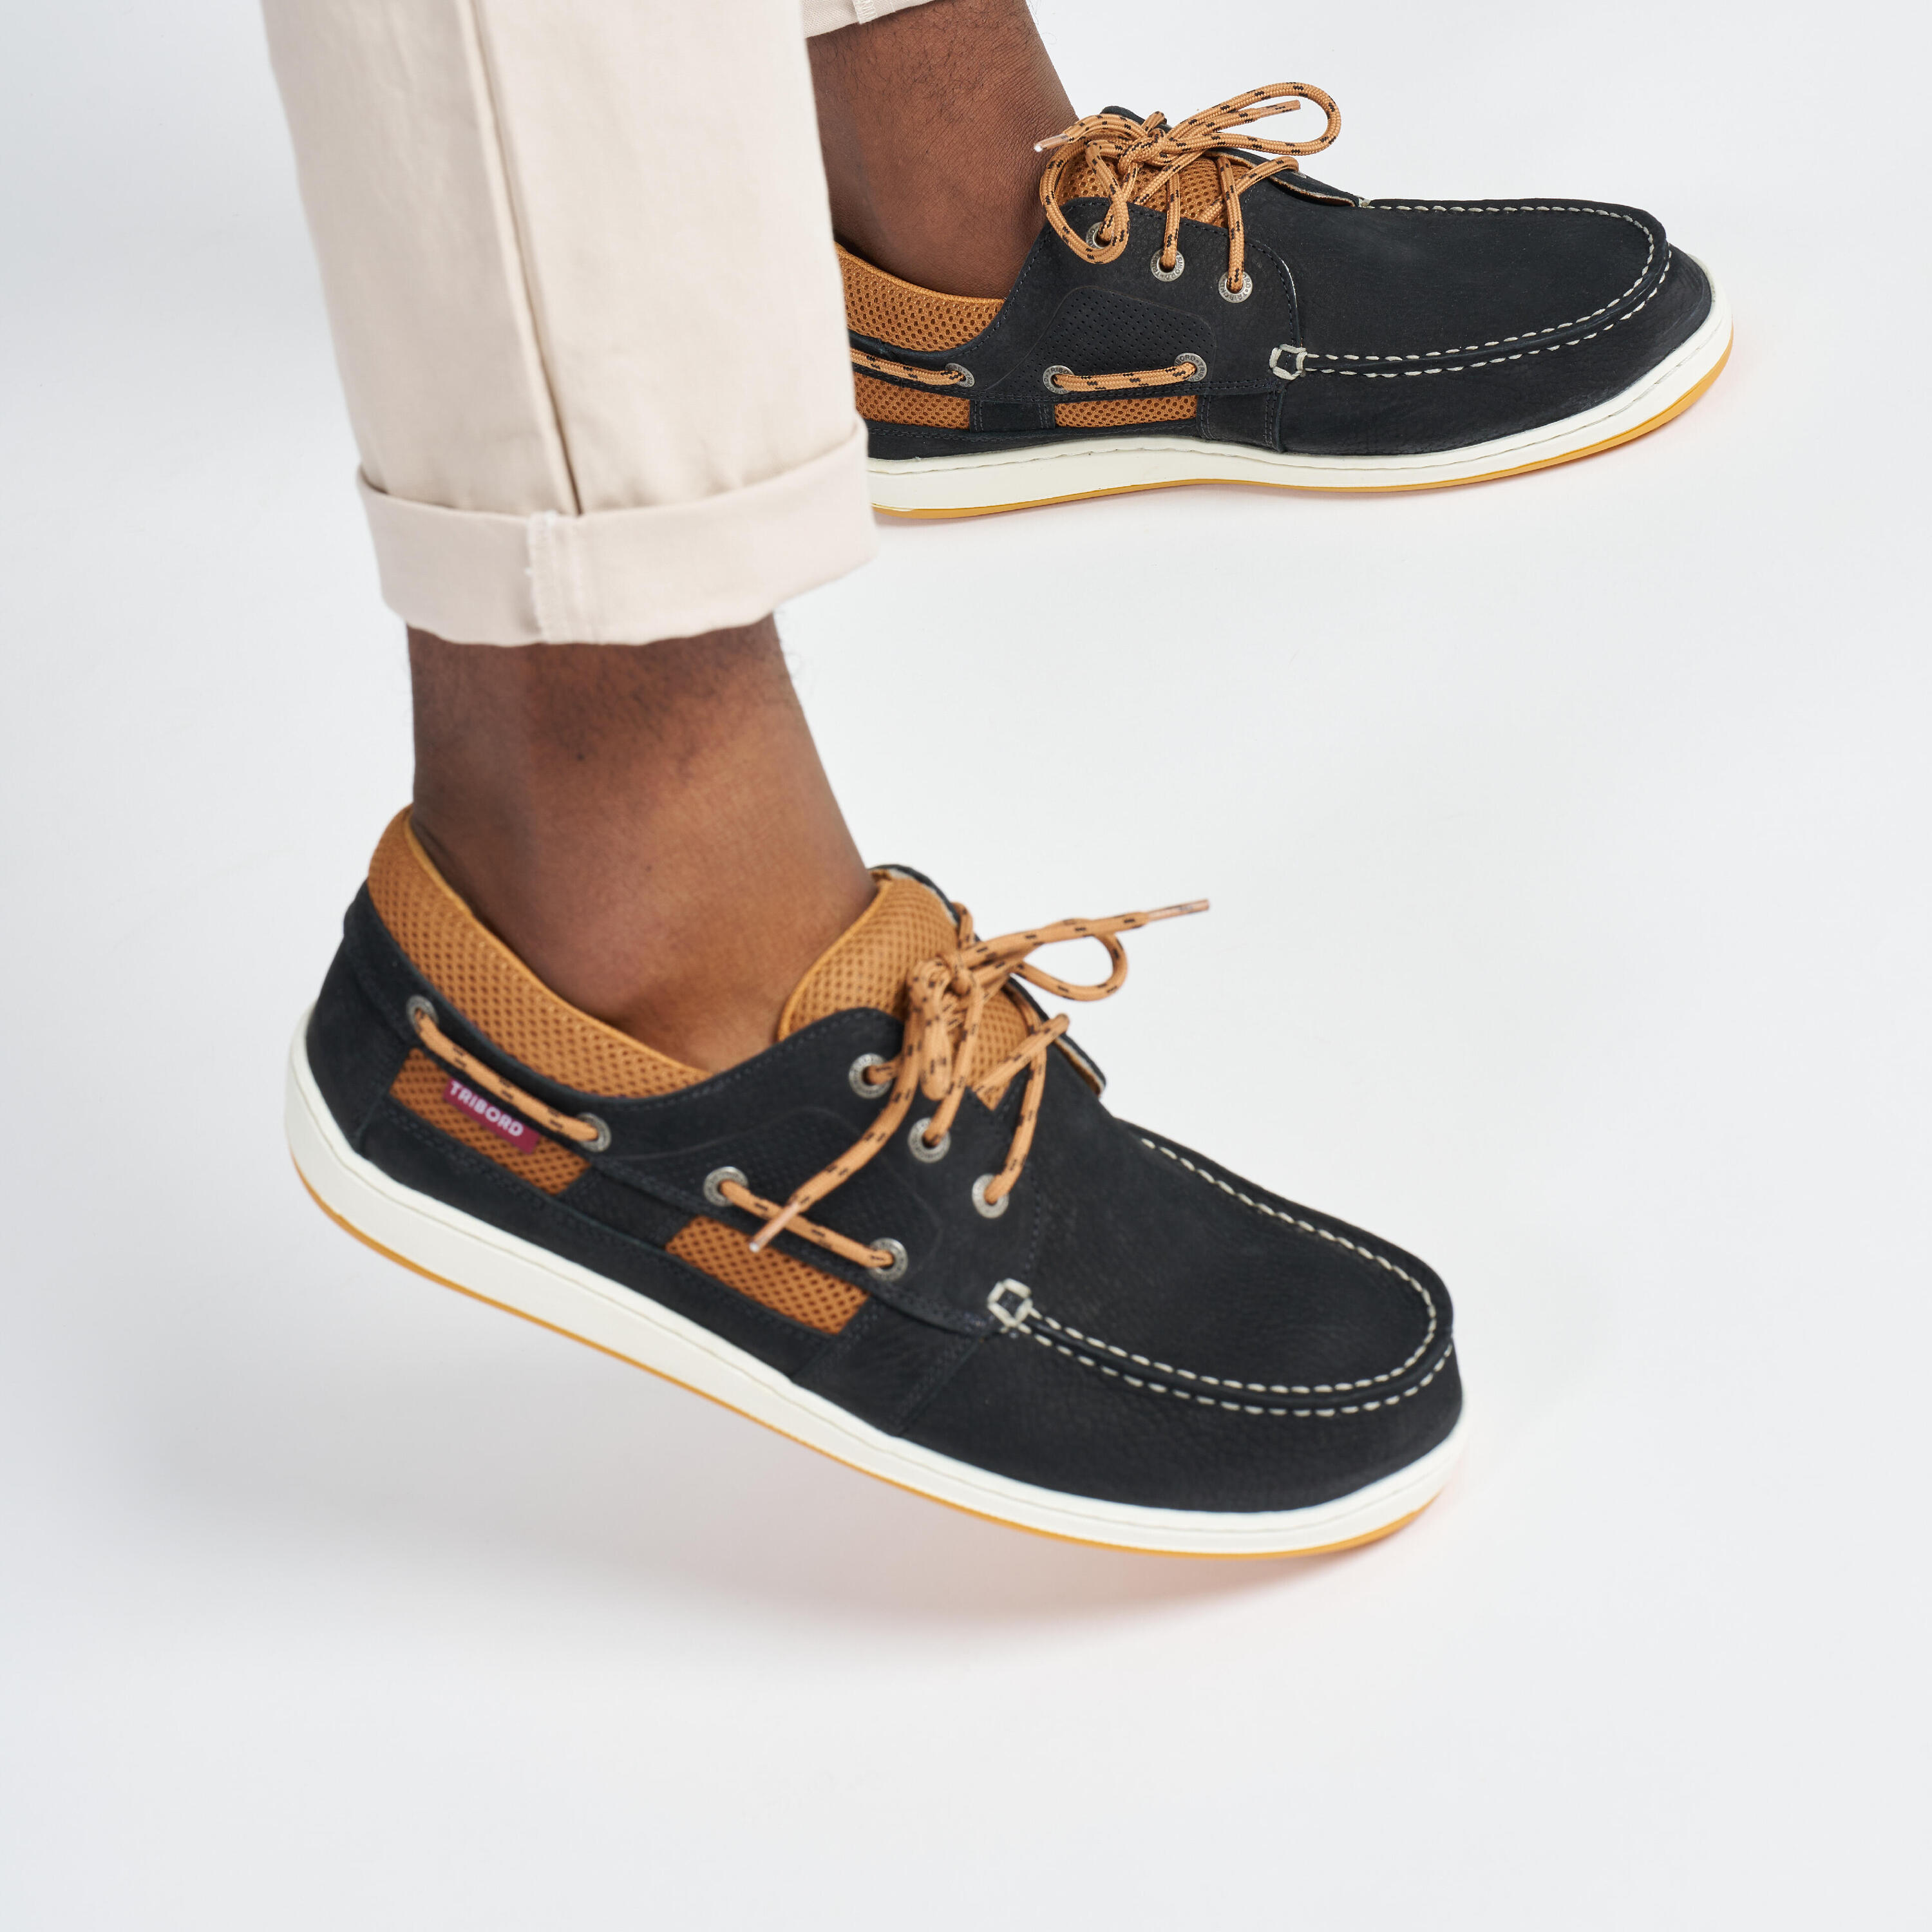 Men's Leather Boat Shoes Clipper Black 5/7